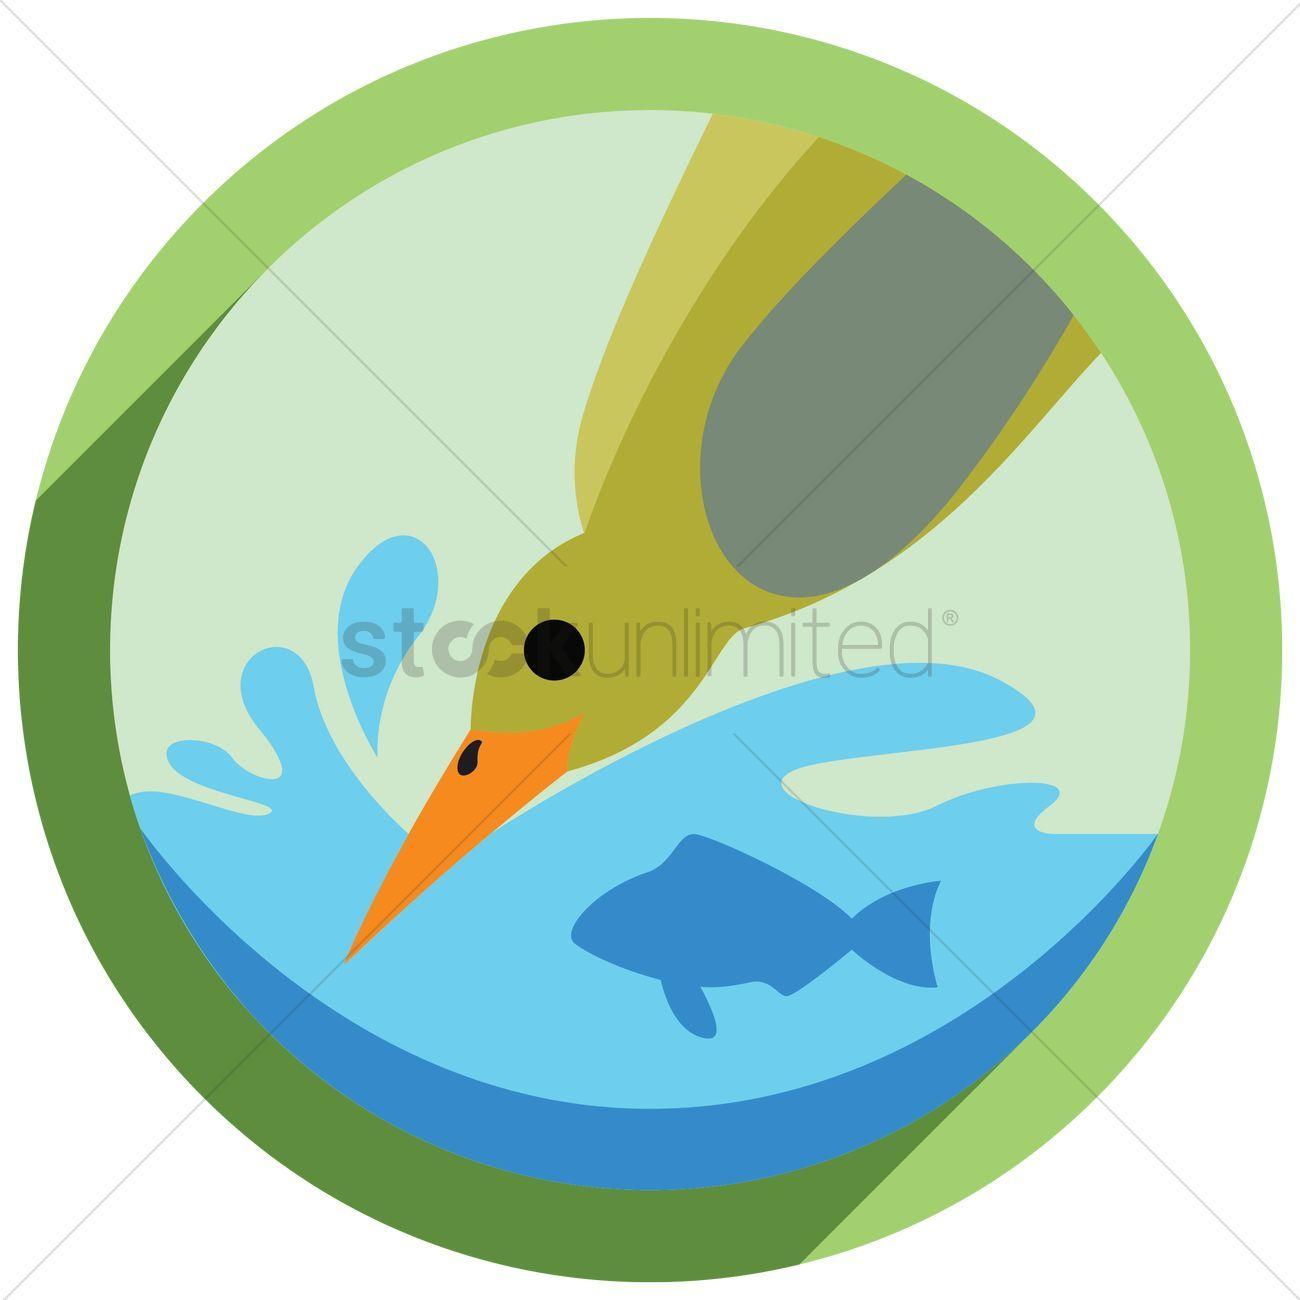 Diving Bird in Circle Logo - Bird diving in water Vector Image - 1381295 | StockUnlimited